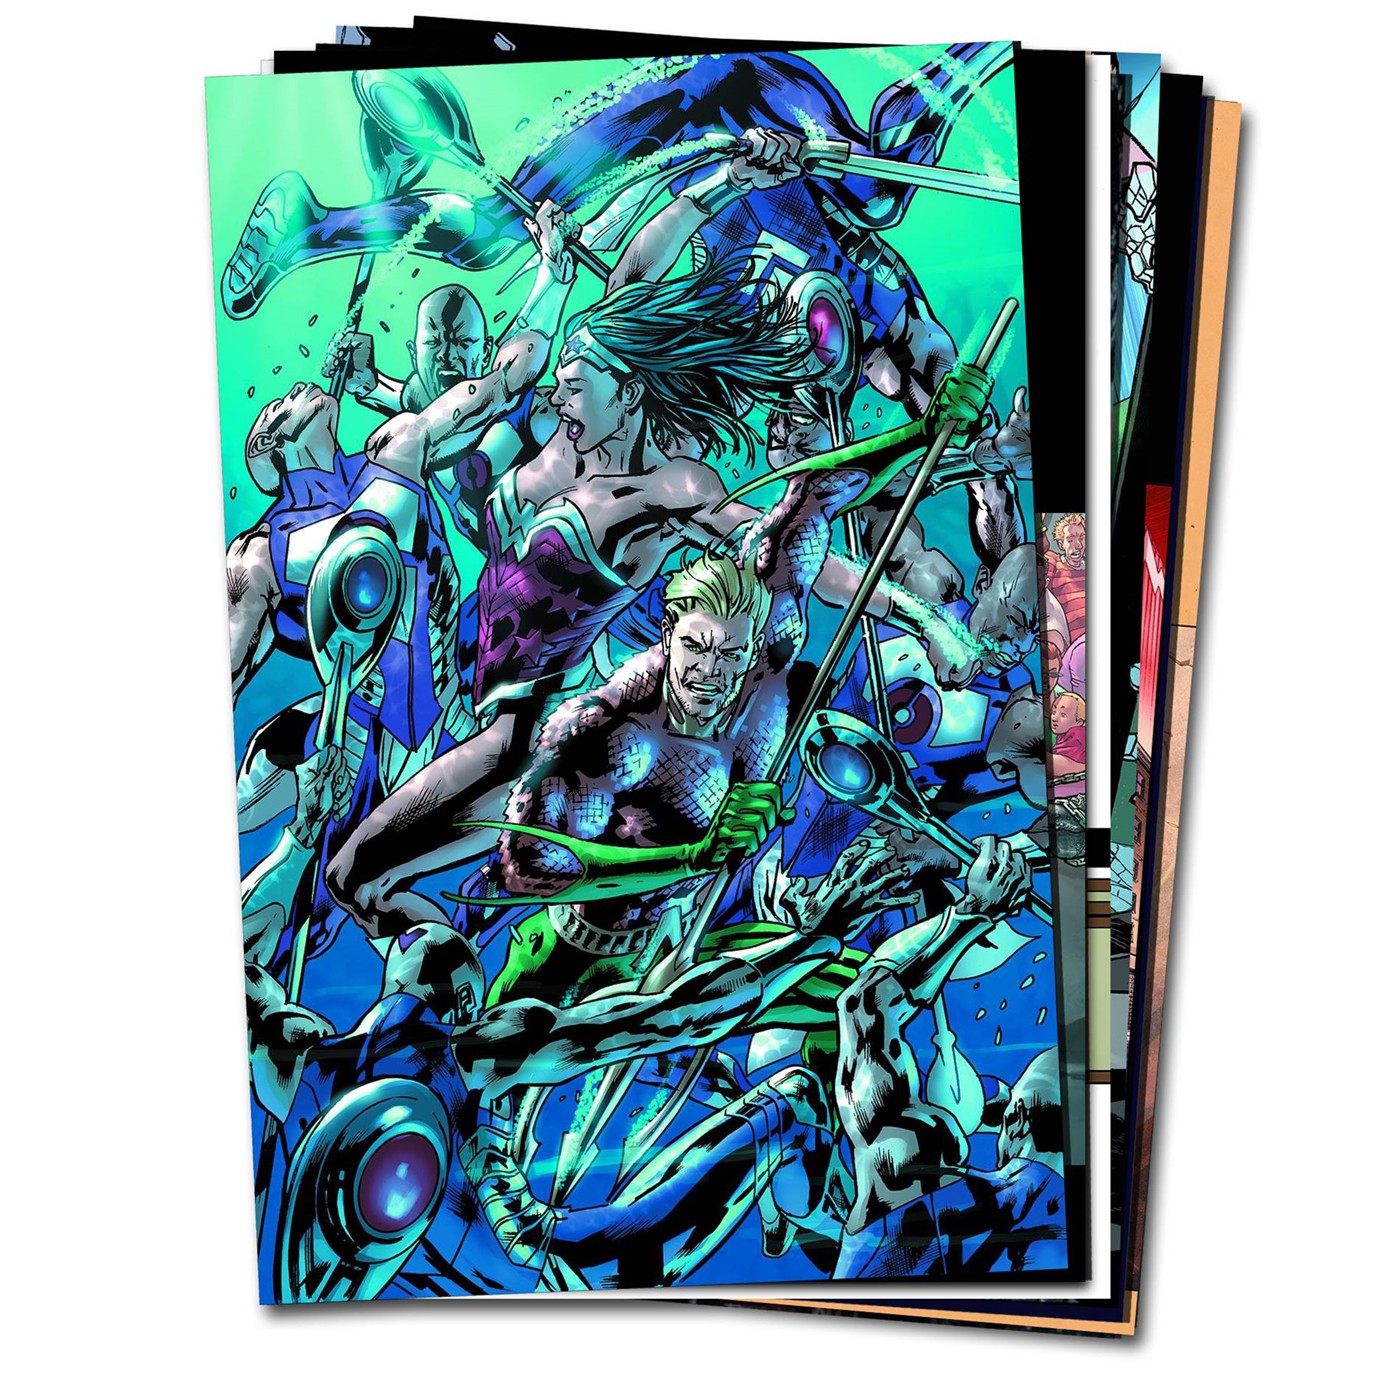 Justice League Comic Book Binge Pack for September